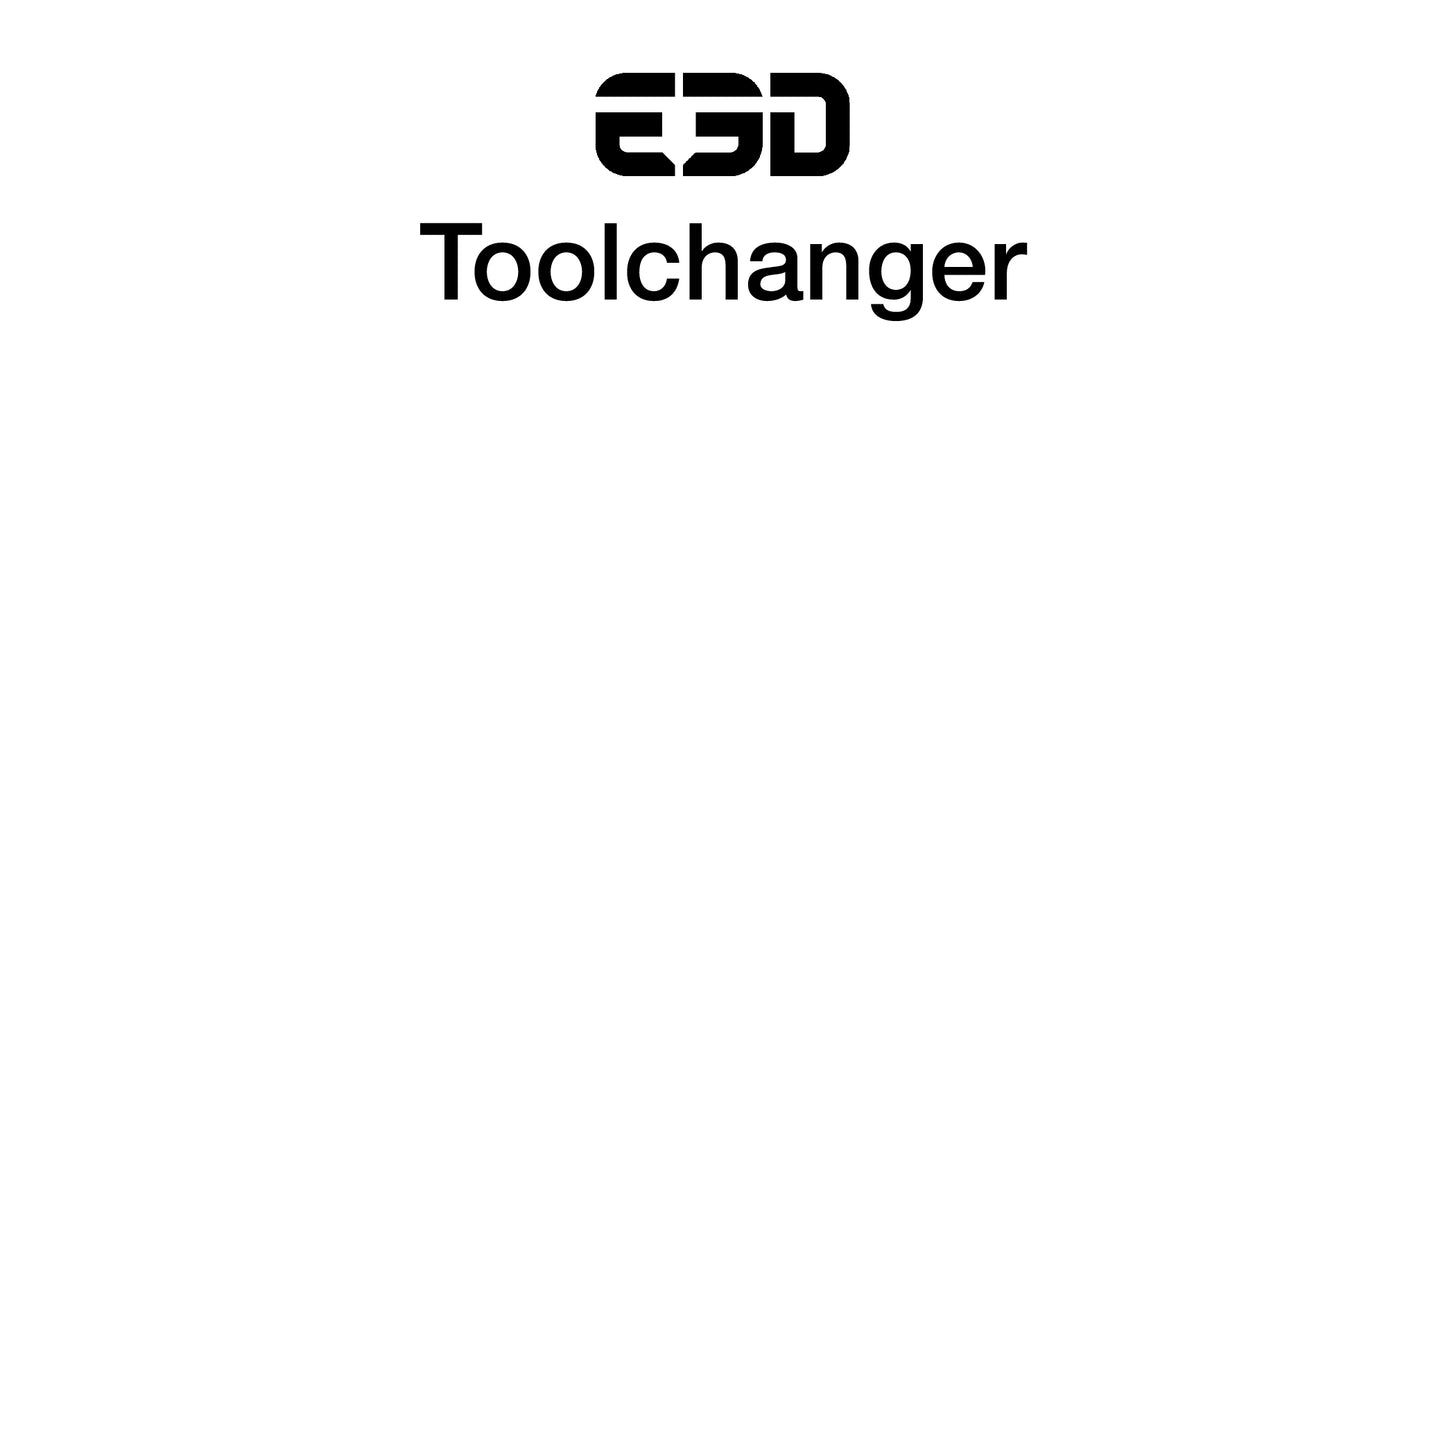 Kit with PEX - E3D ToolChanger - 315 x 215